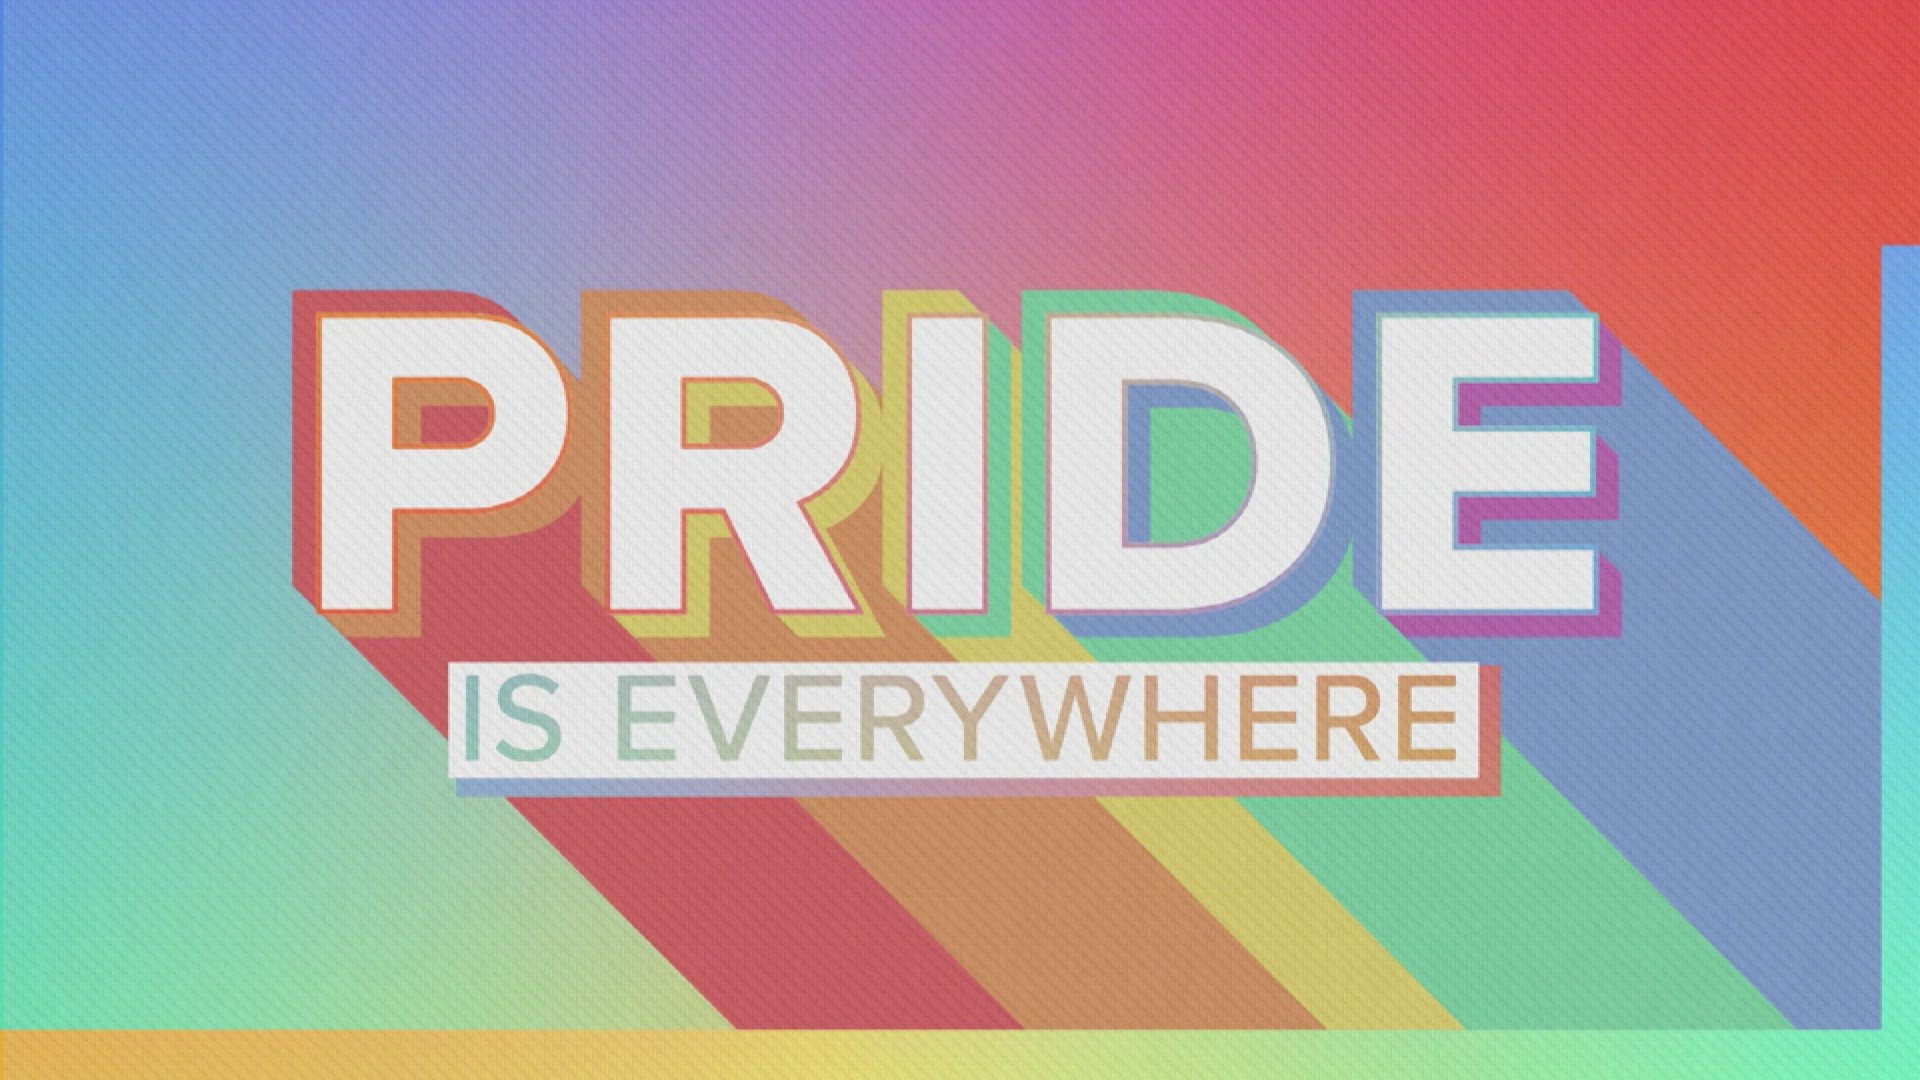 Los Angeles Dodgers on X: Celebrating LGBTQ+ Pride Night at